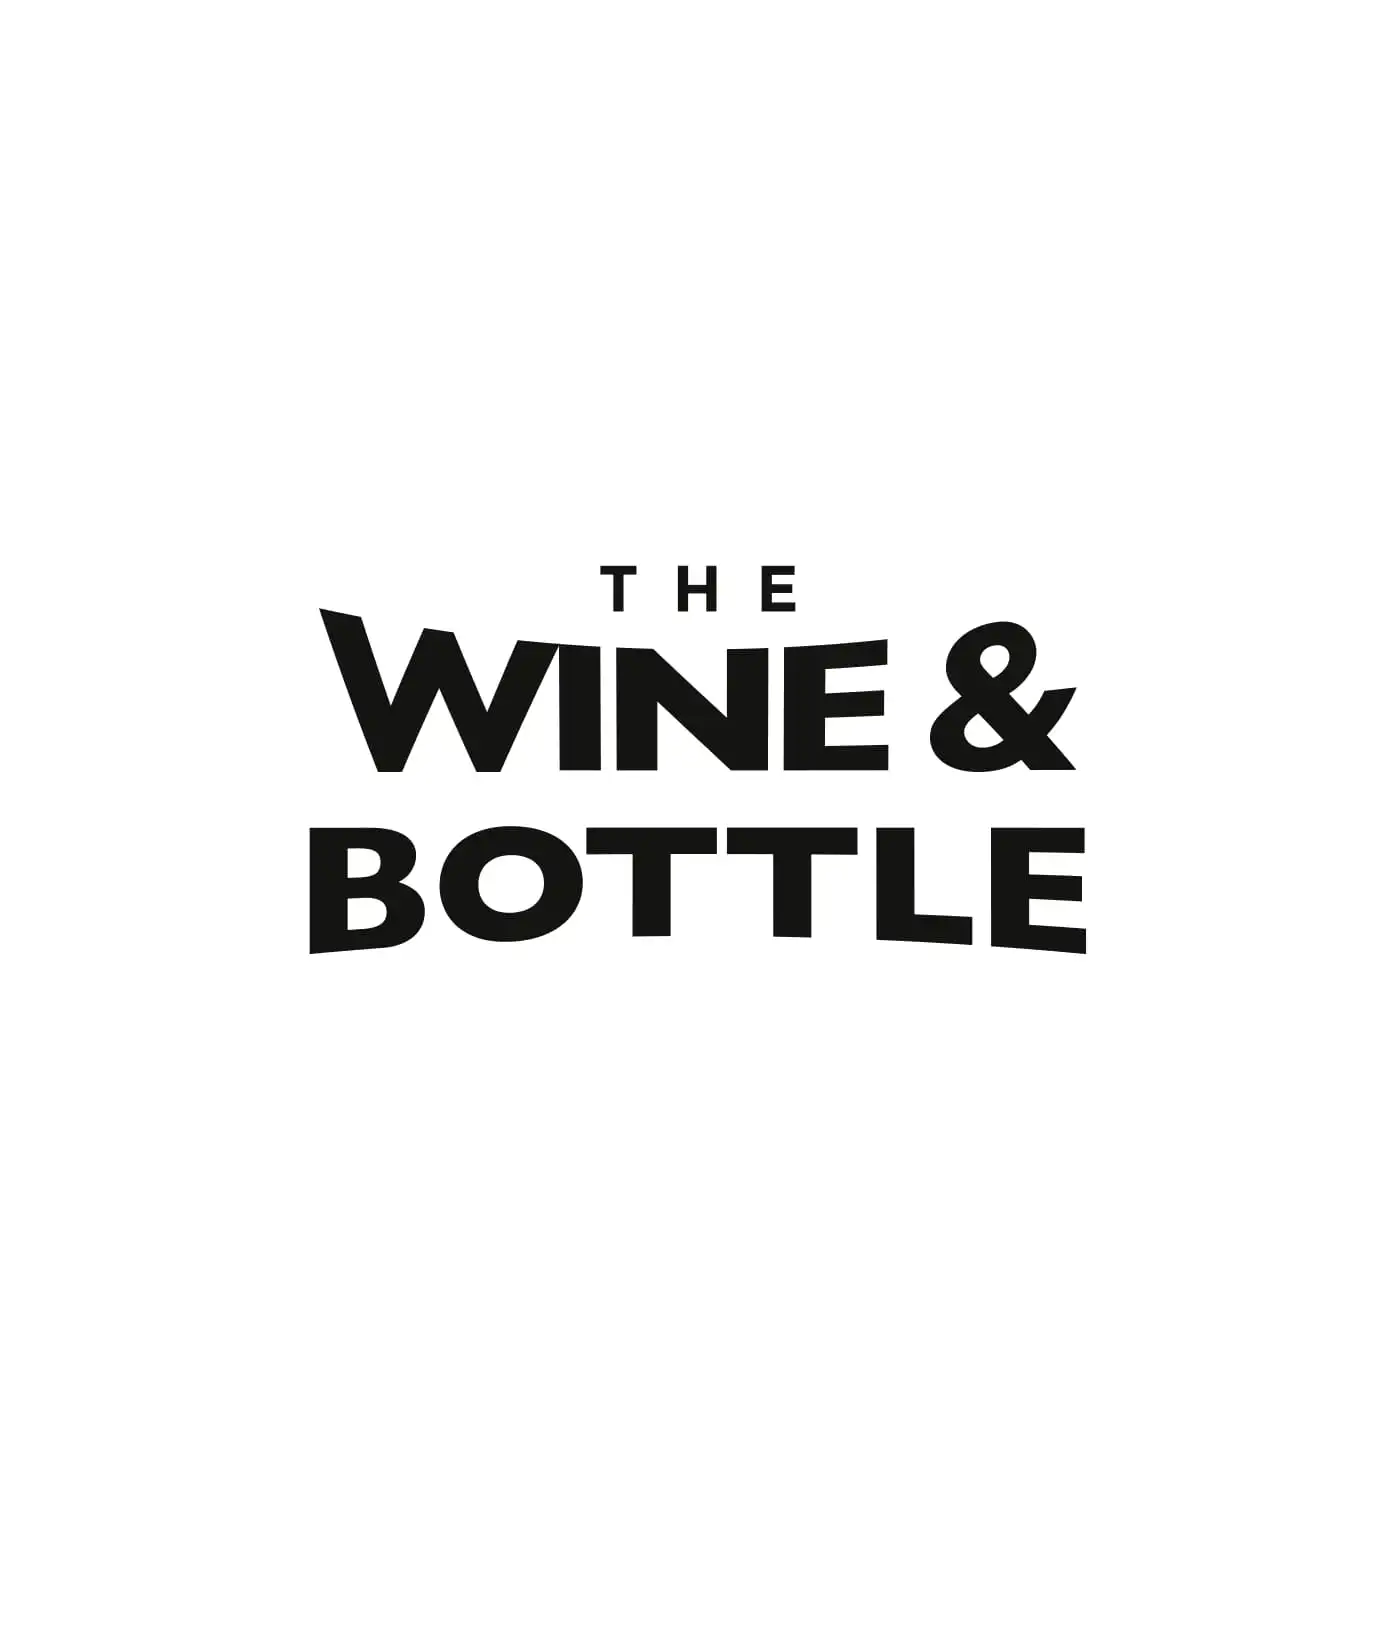 The wine and bottle Qr code menu restaurant